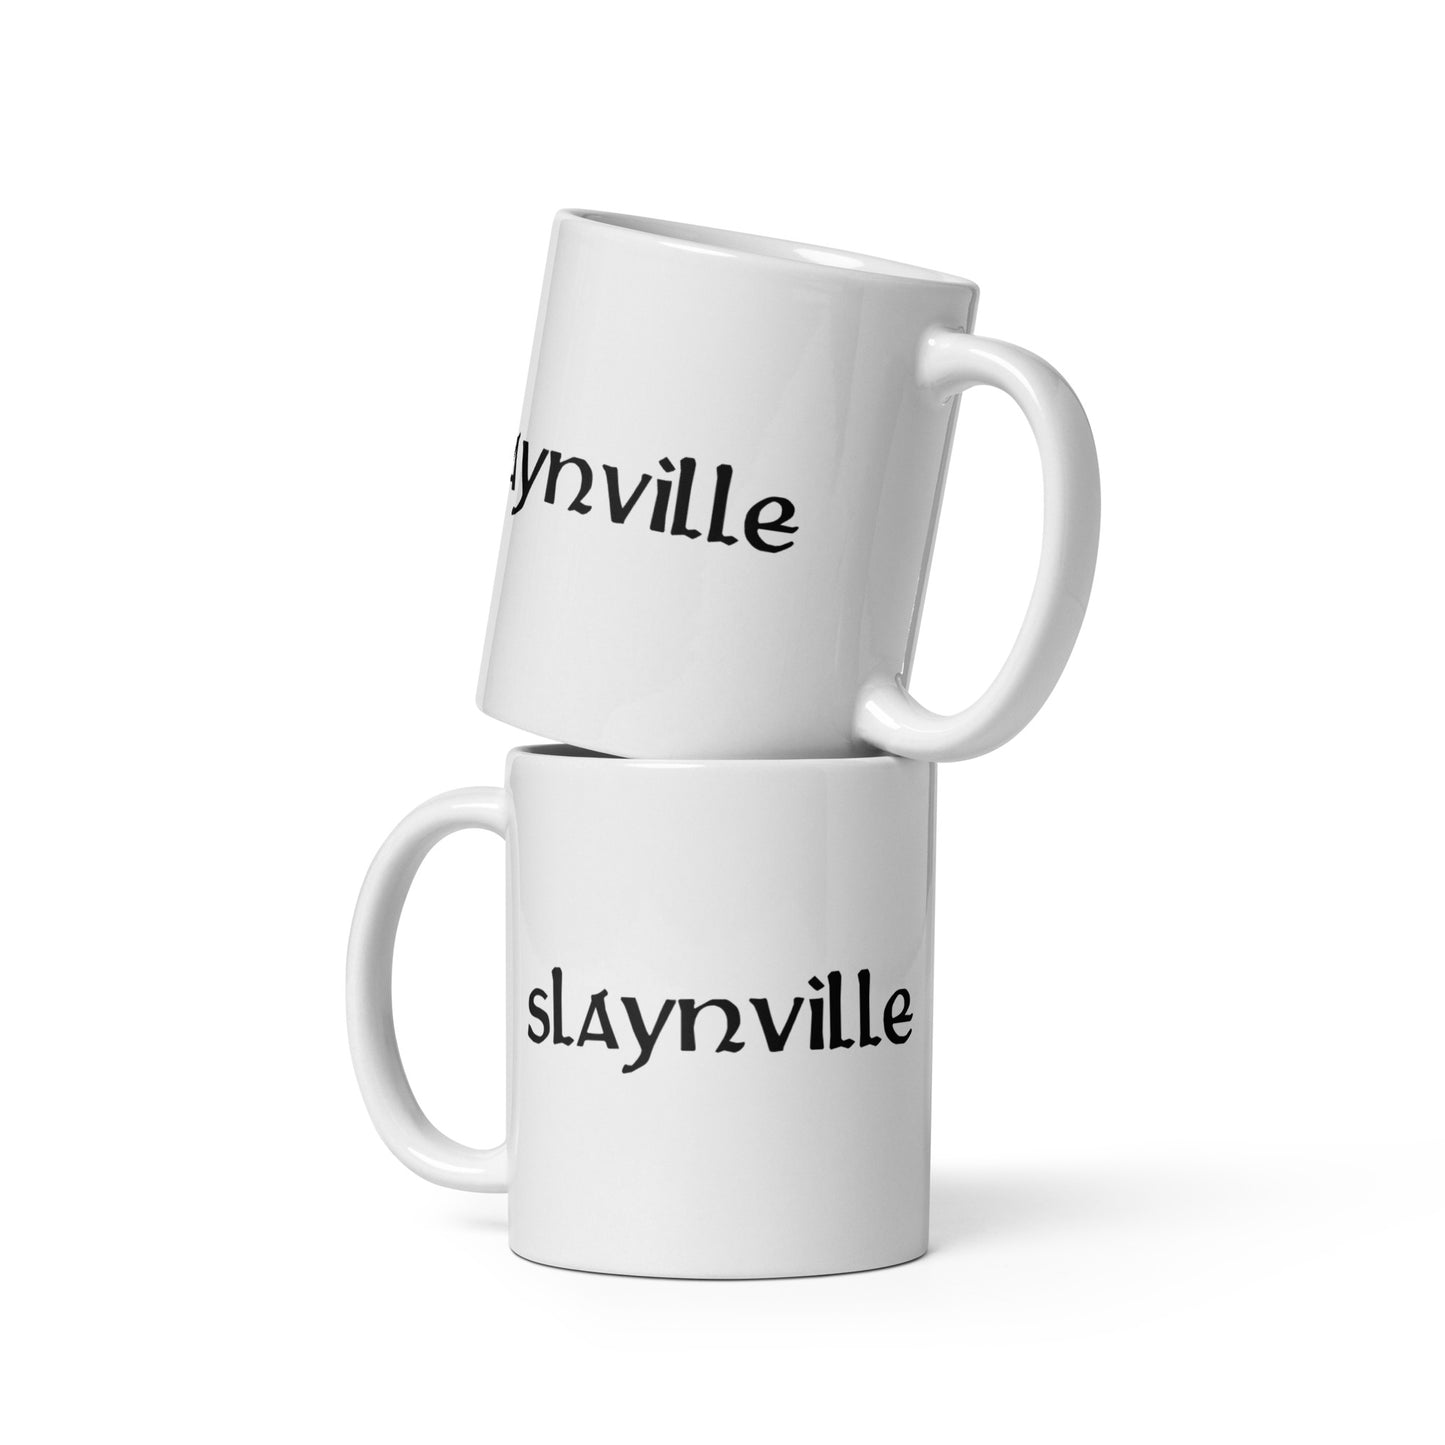 Slaynville Mug